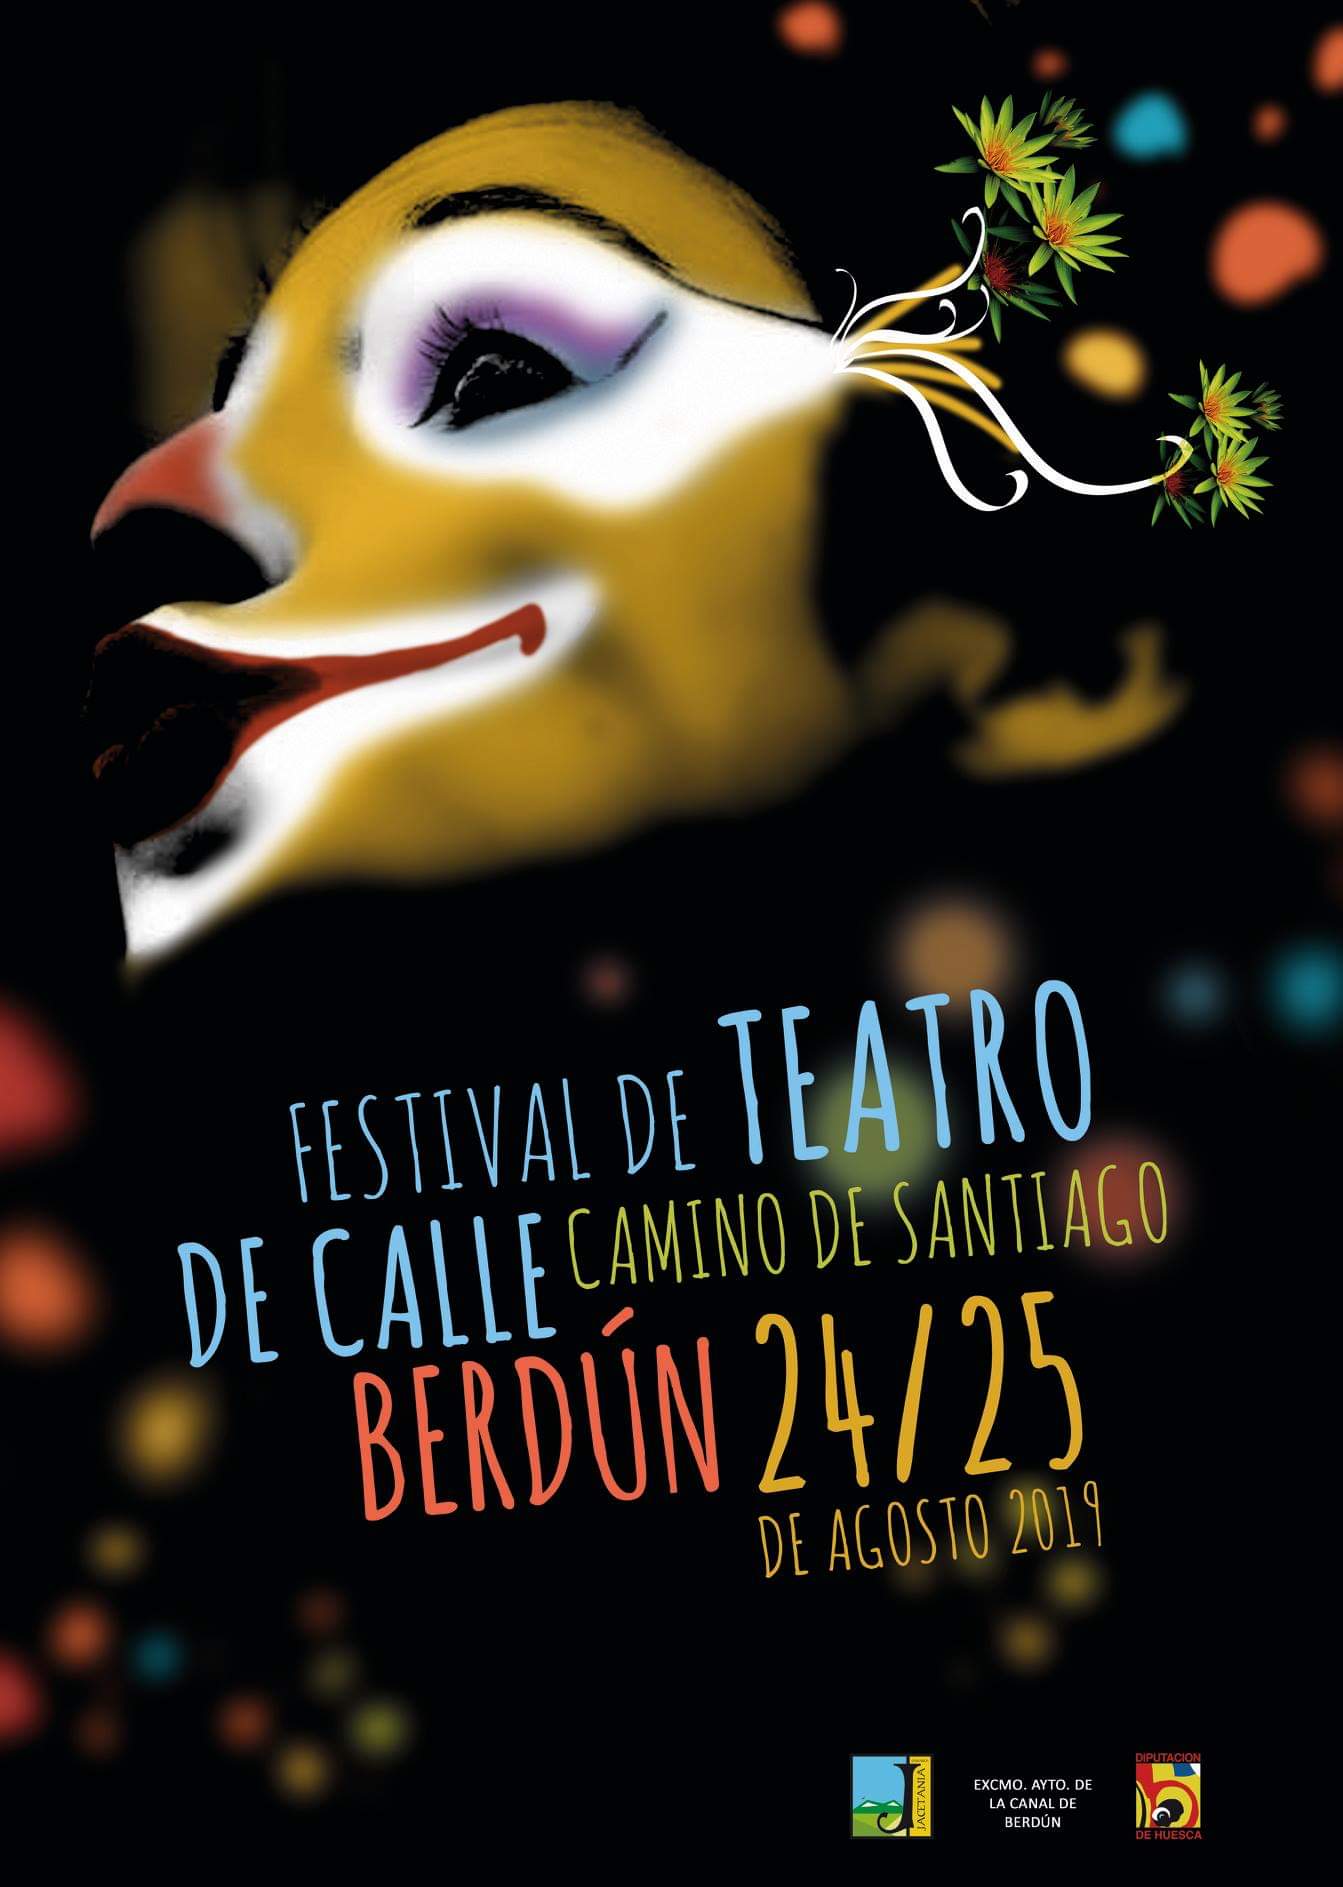 Festival de Teatro de Calle Camino de Santiago